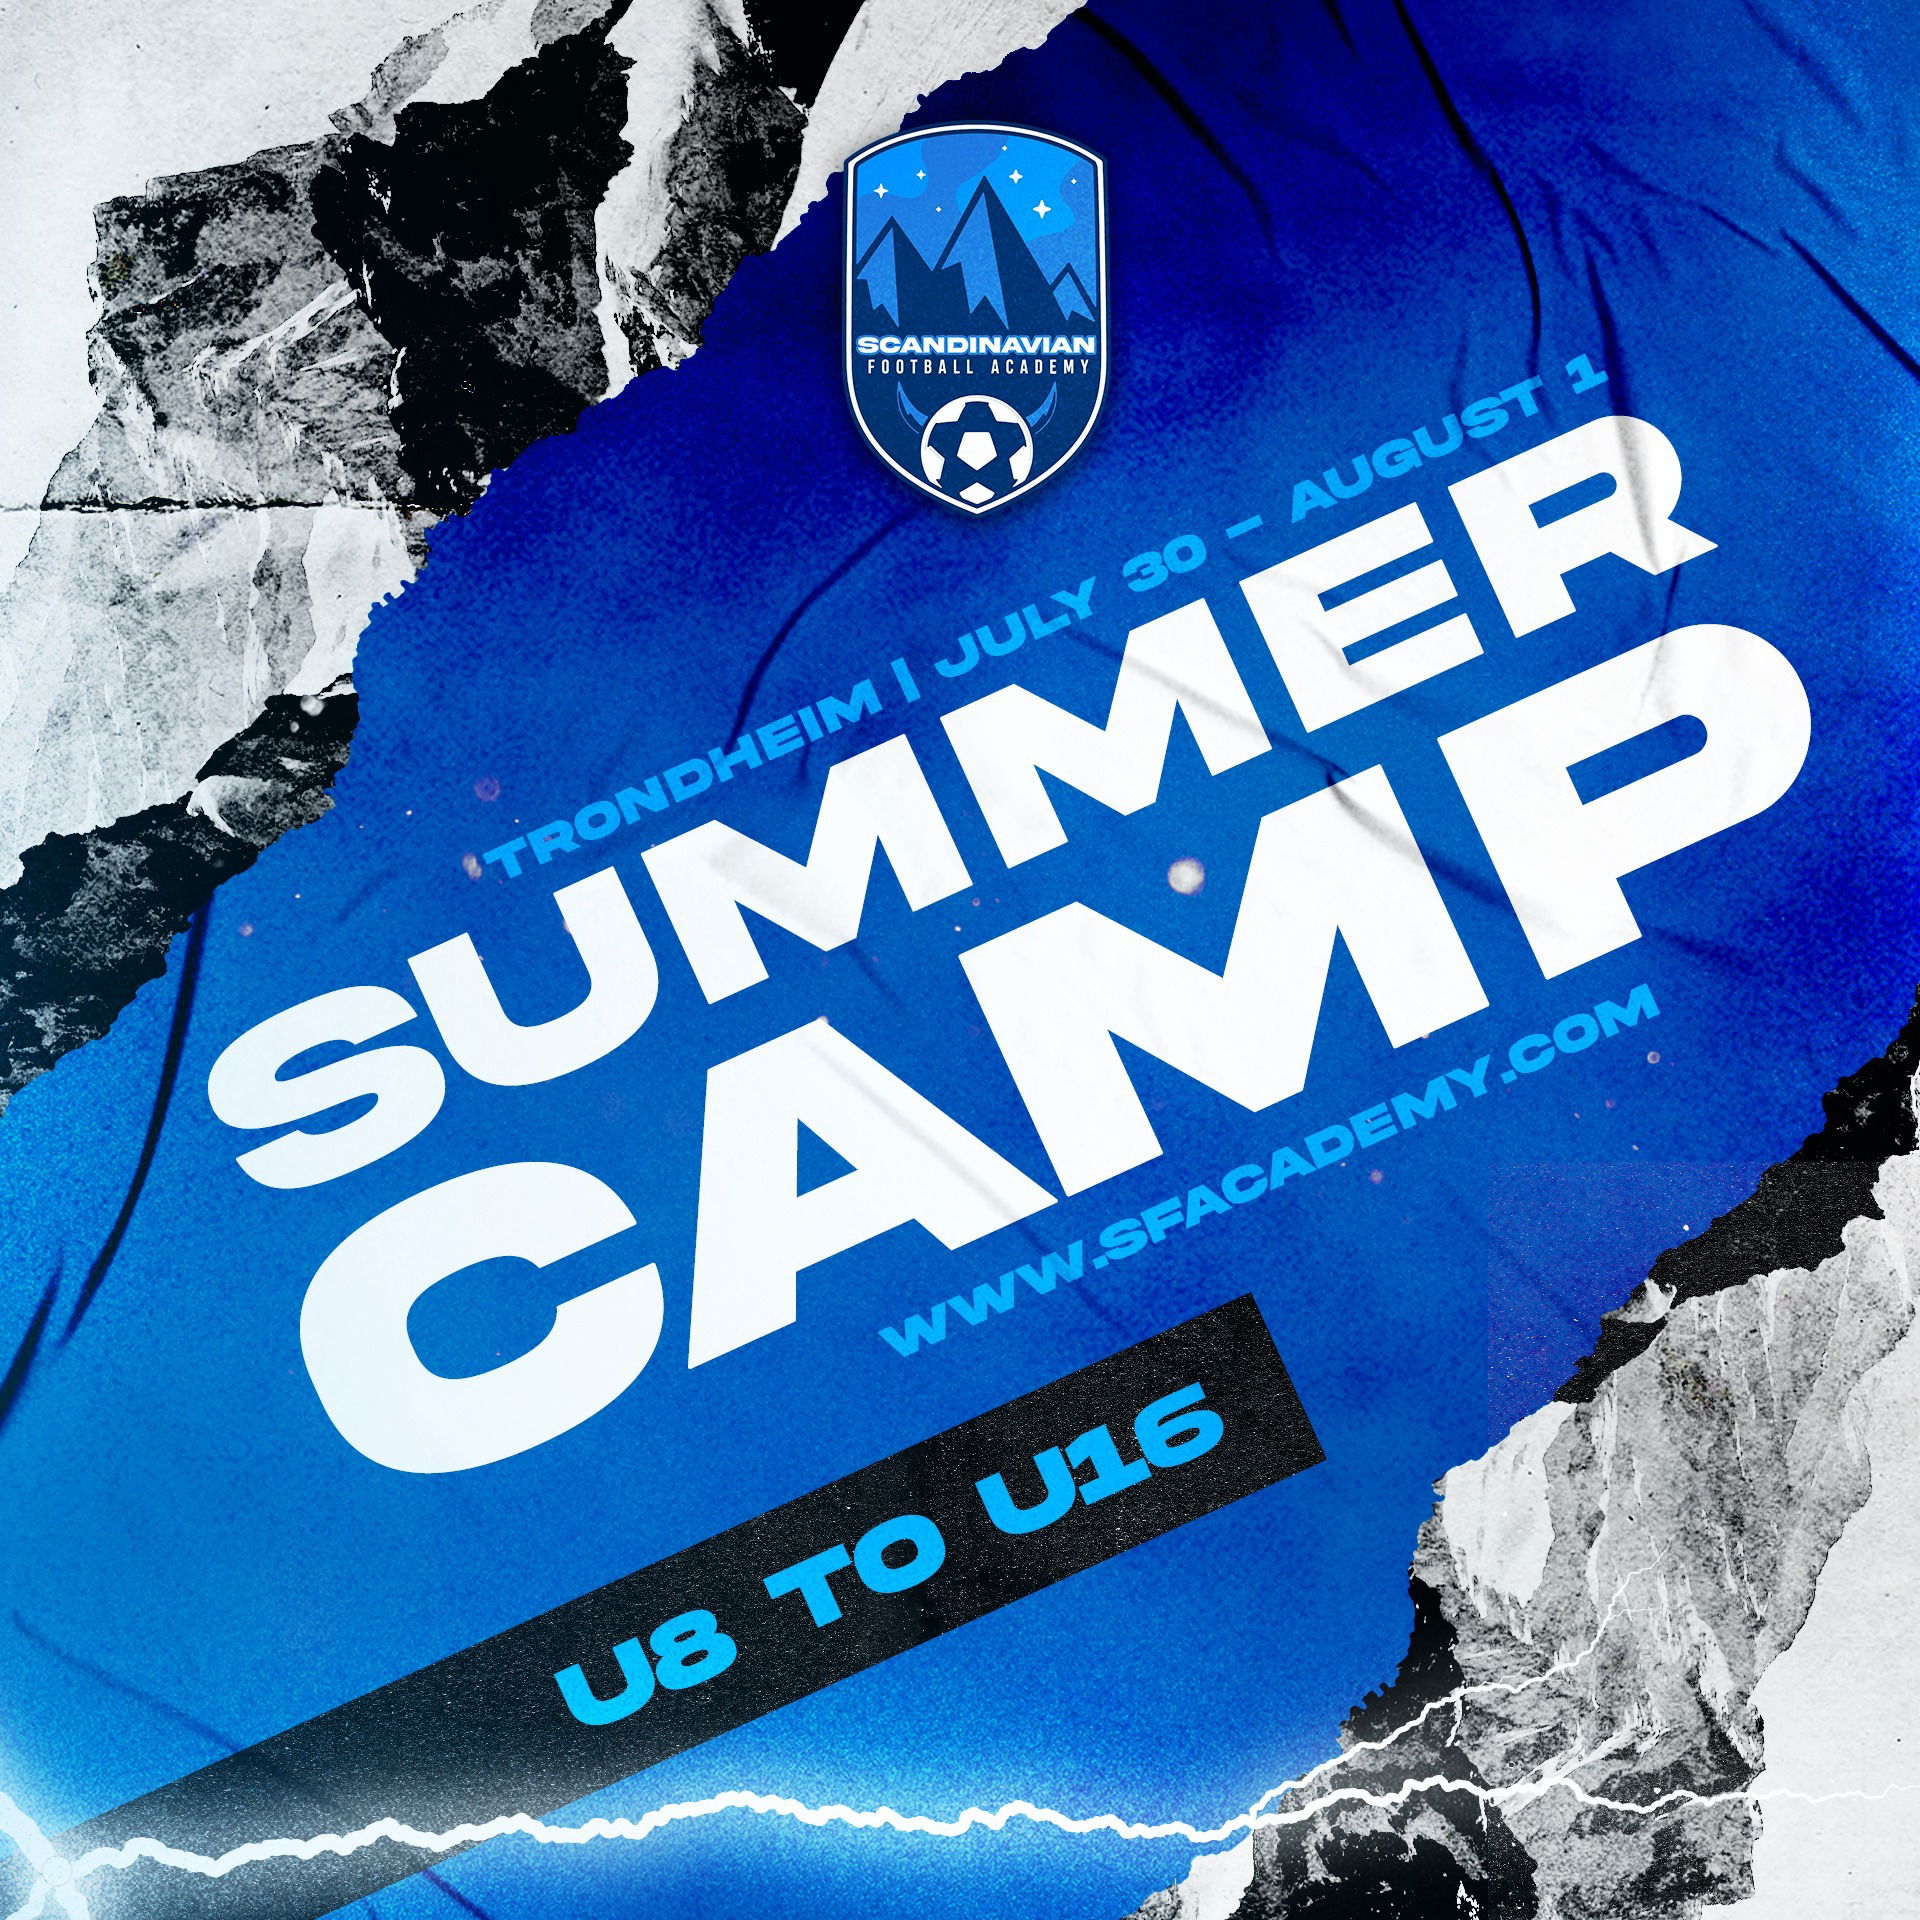 Event: Summer Camp Trondheim